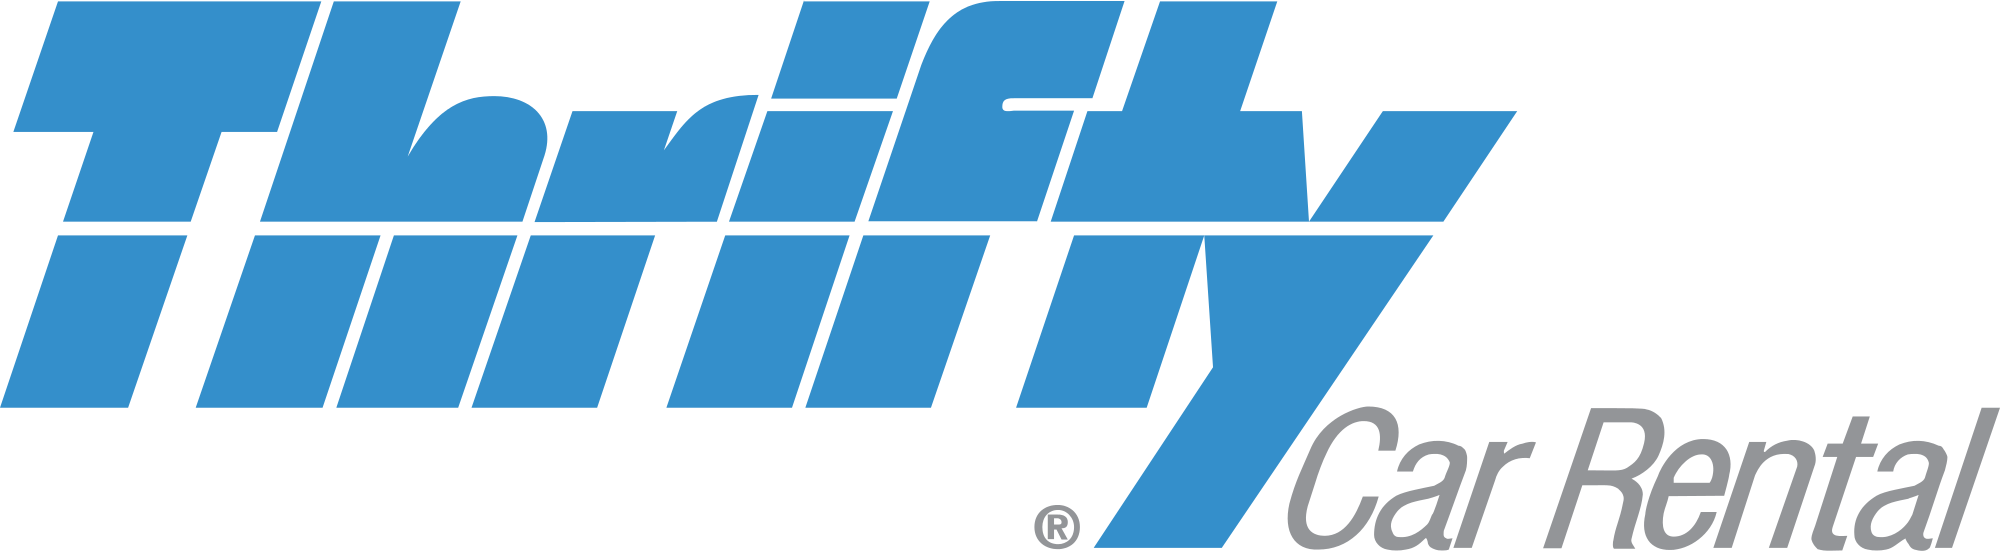 Thrifty Brand Logo